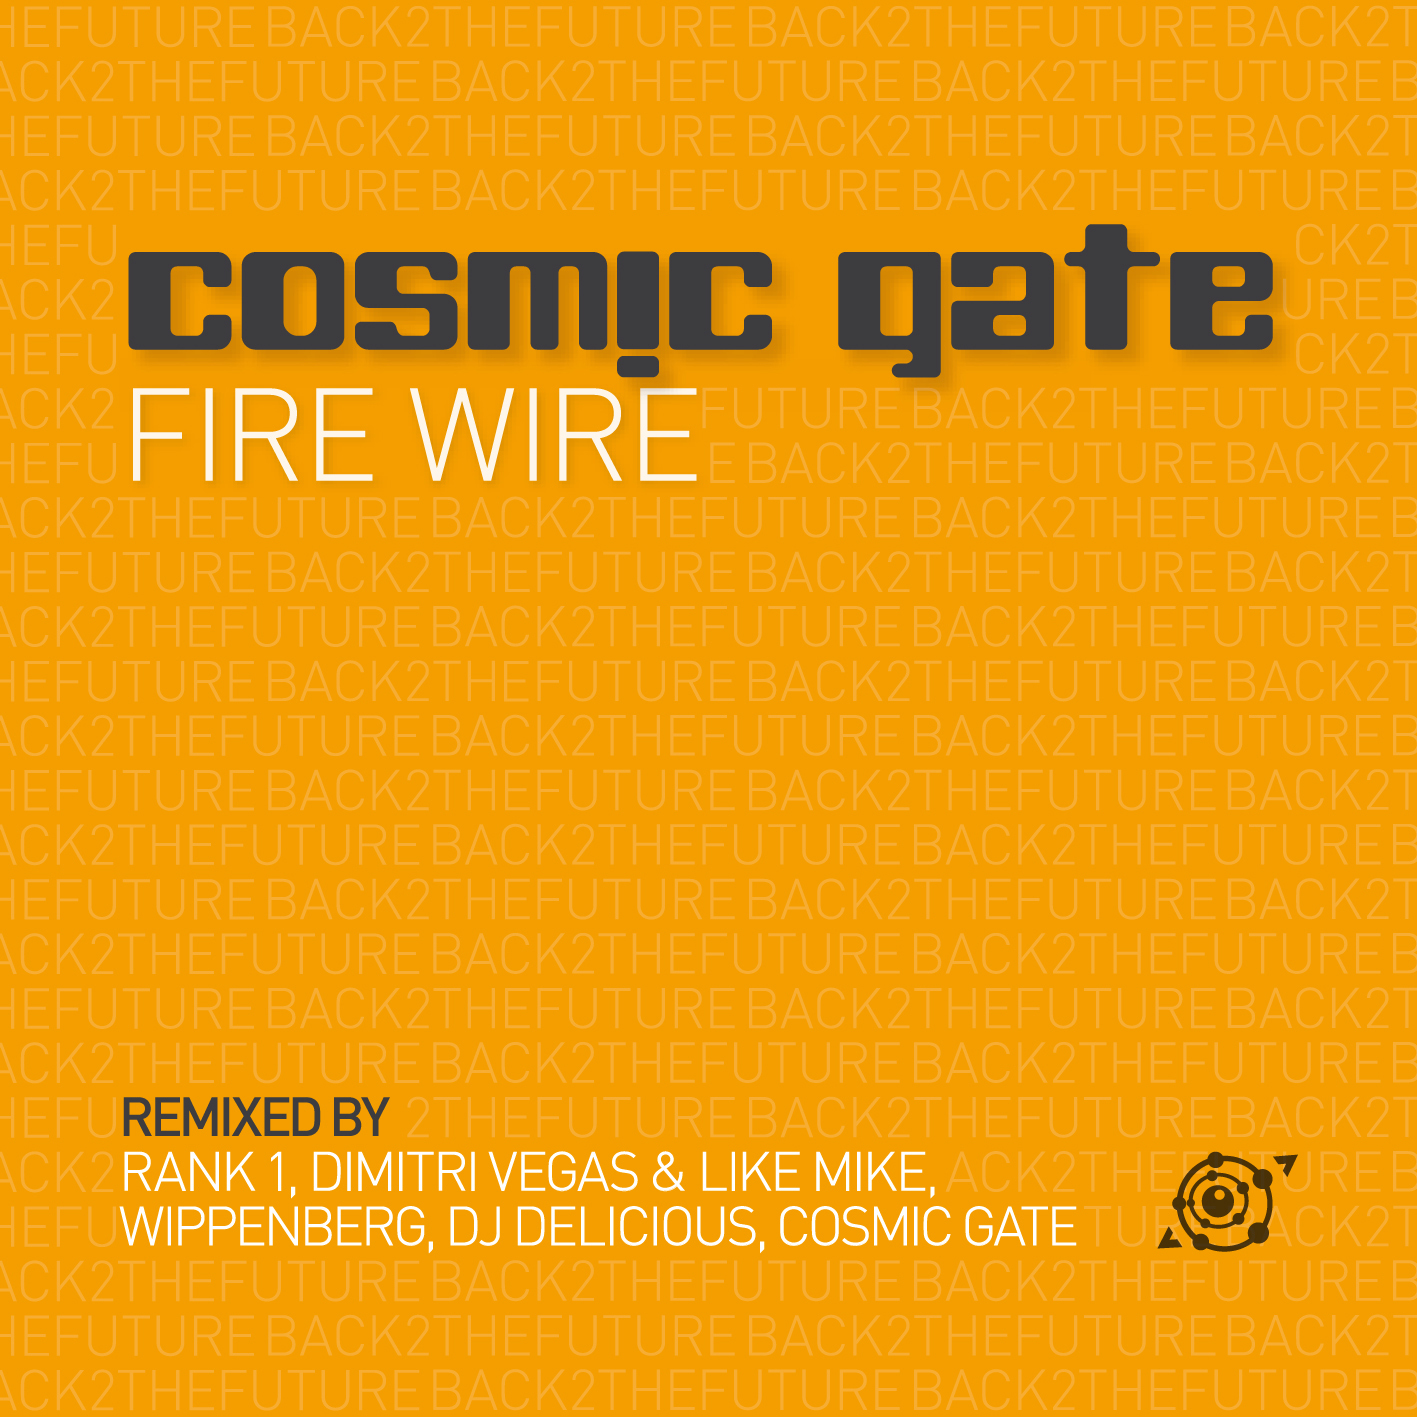 Fire Wire (Rank 1 Remix)